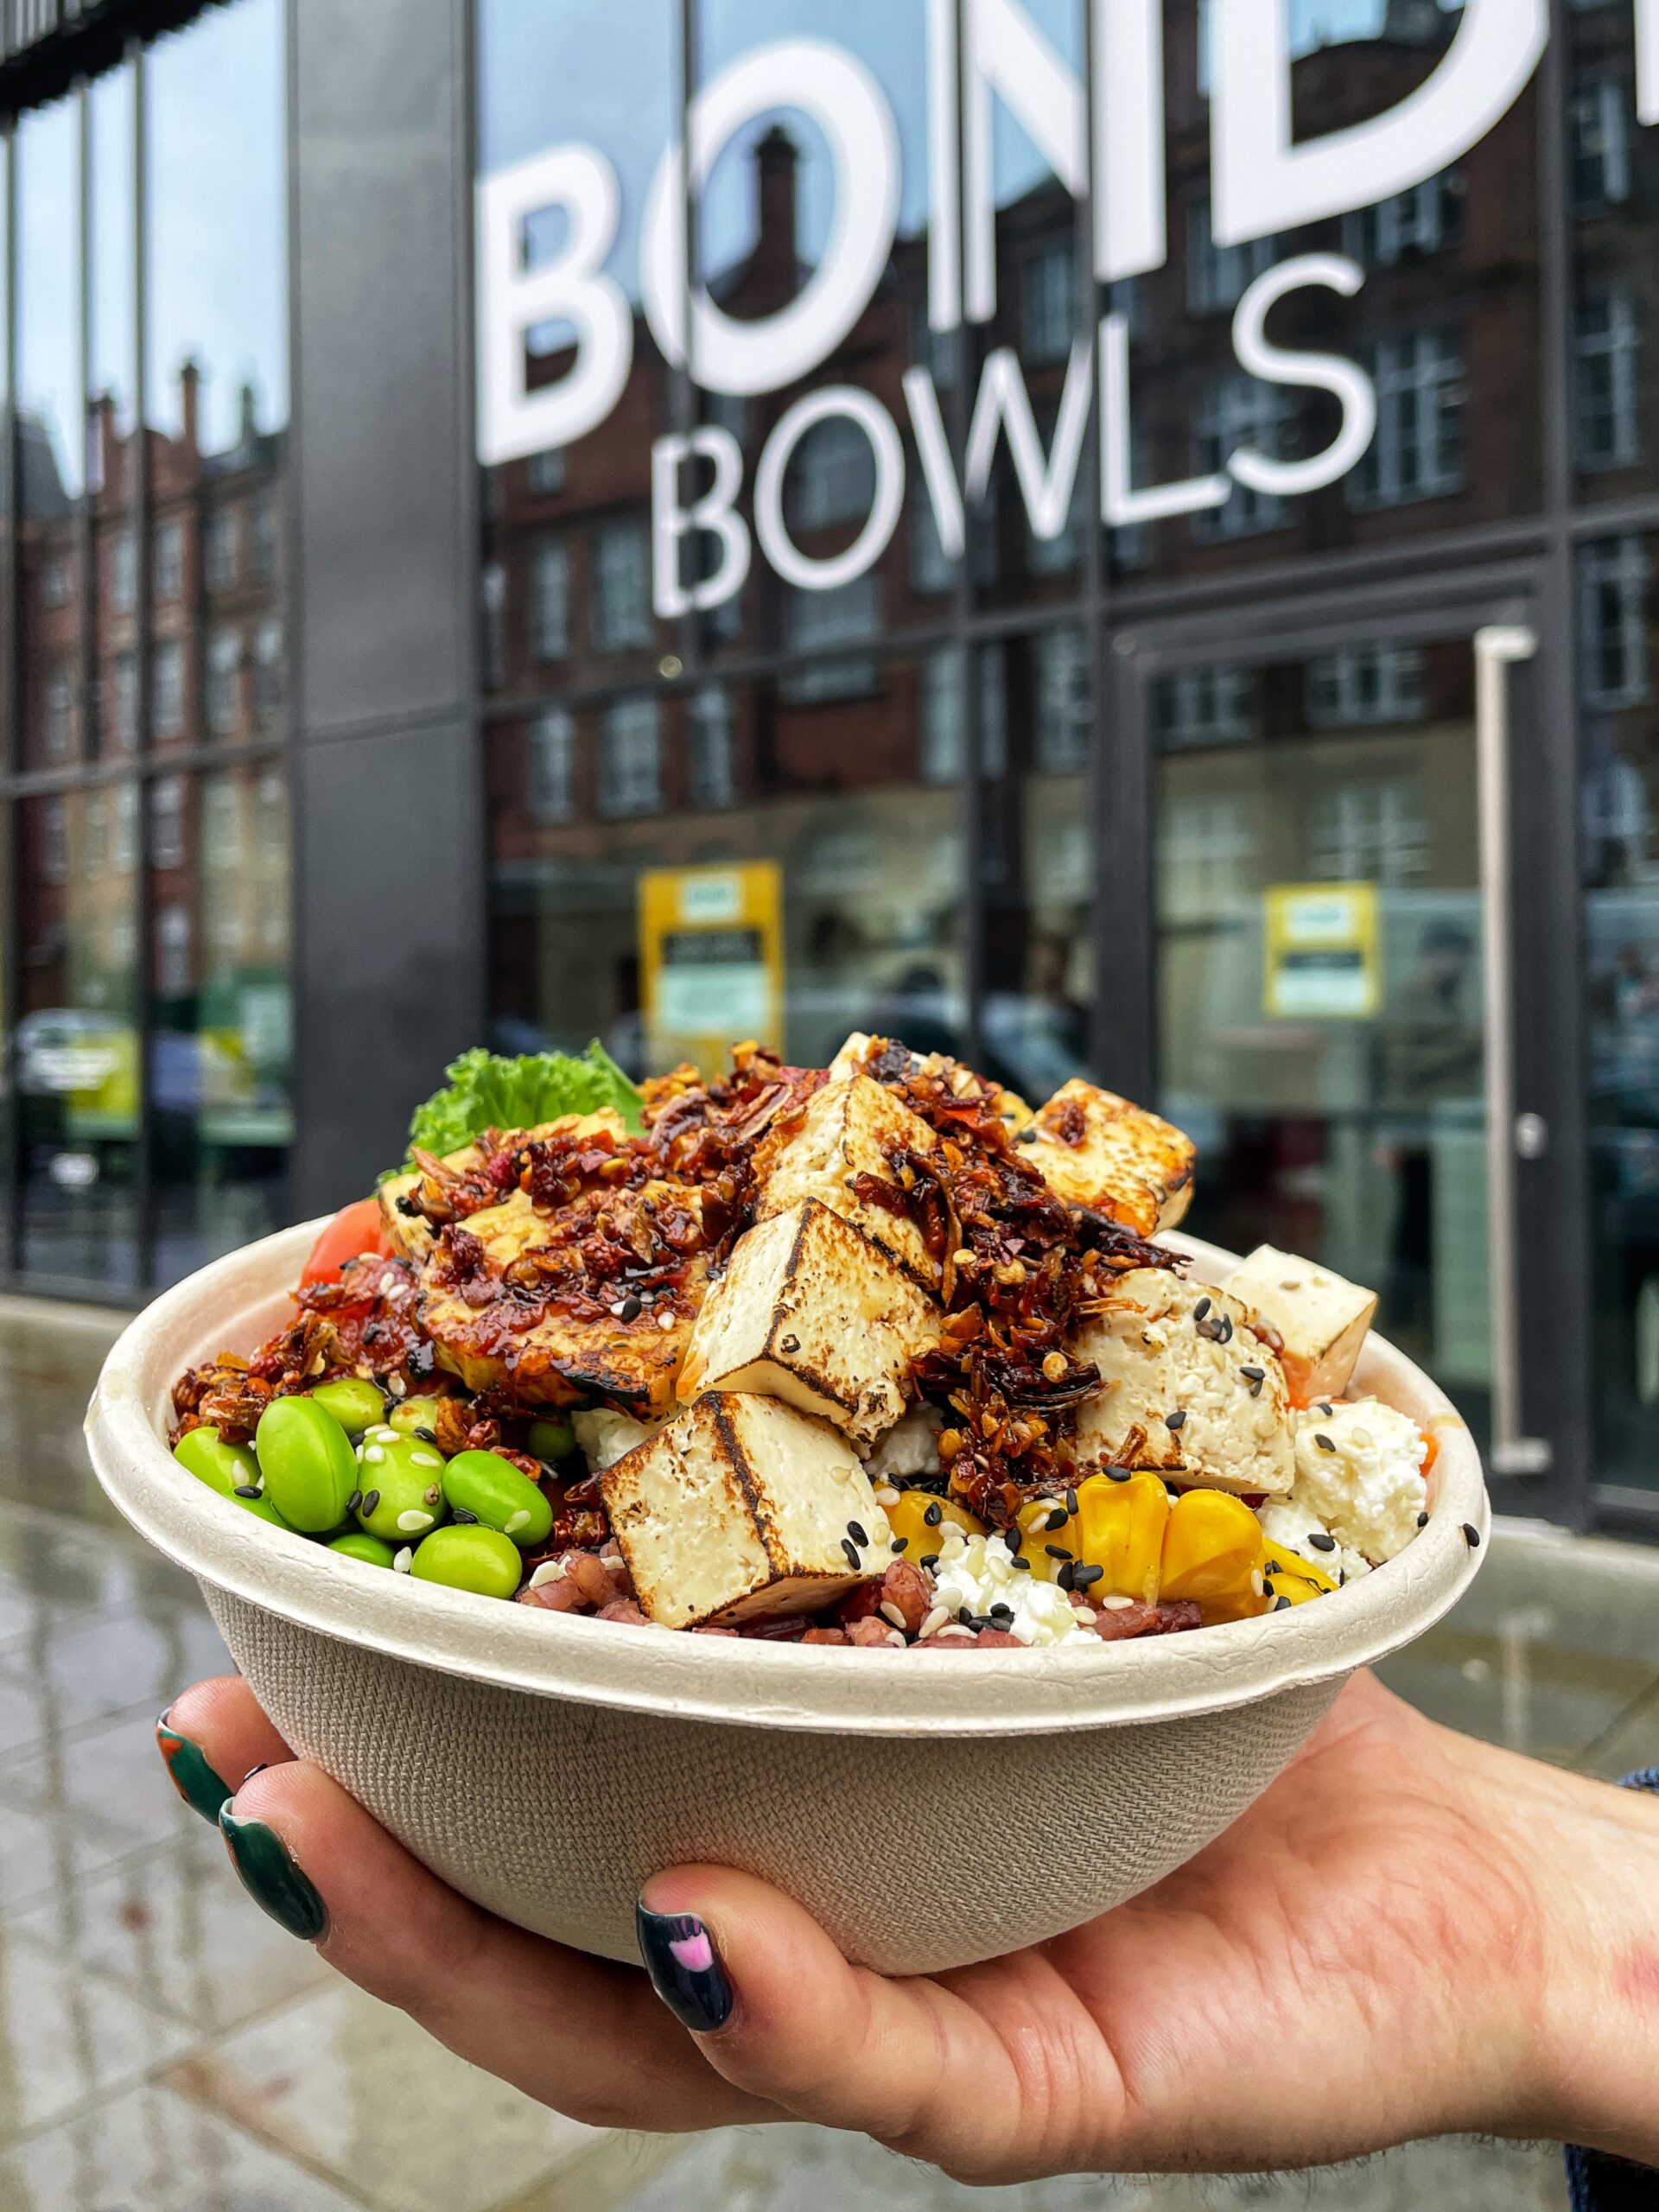 Bondi Bowls has opened at Kampus in Manchester